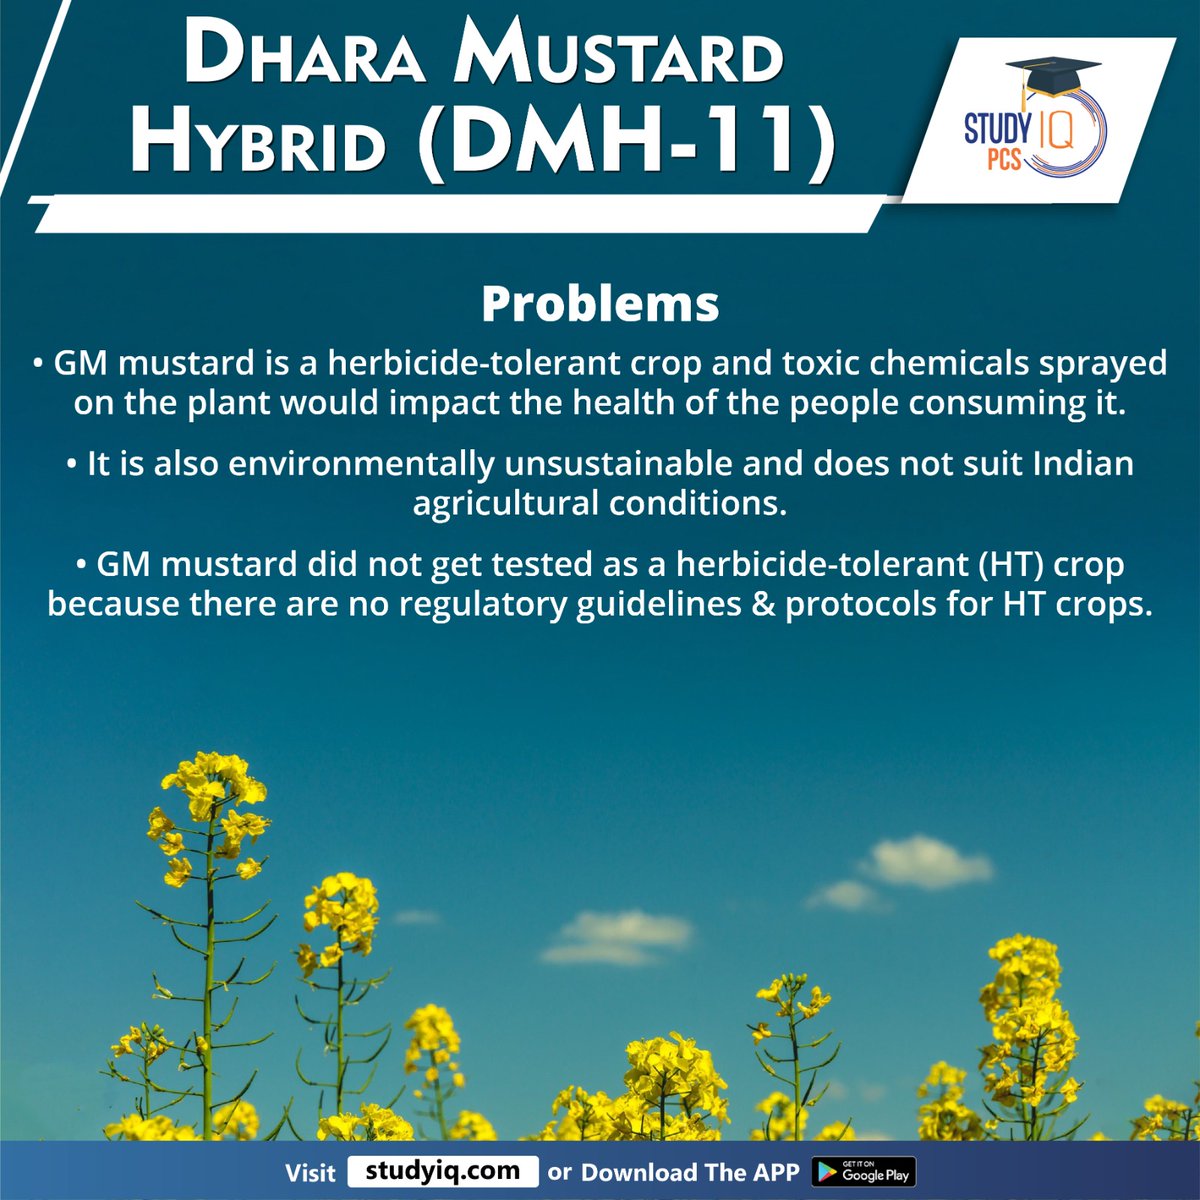 Dhara Mustard Hybrid (DMH-11)

#dharamustardhybrid #dmh11 #india #mustardcrop #whyinnews #delhiuniversity #delhi #herbicidetolerant #ht #barstar #europe #gmcrops #gmmustard #indianagriculture #htcrops #uppsc #uppcs #pcs #psc #bpsc